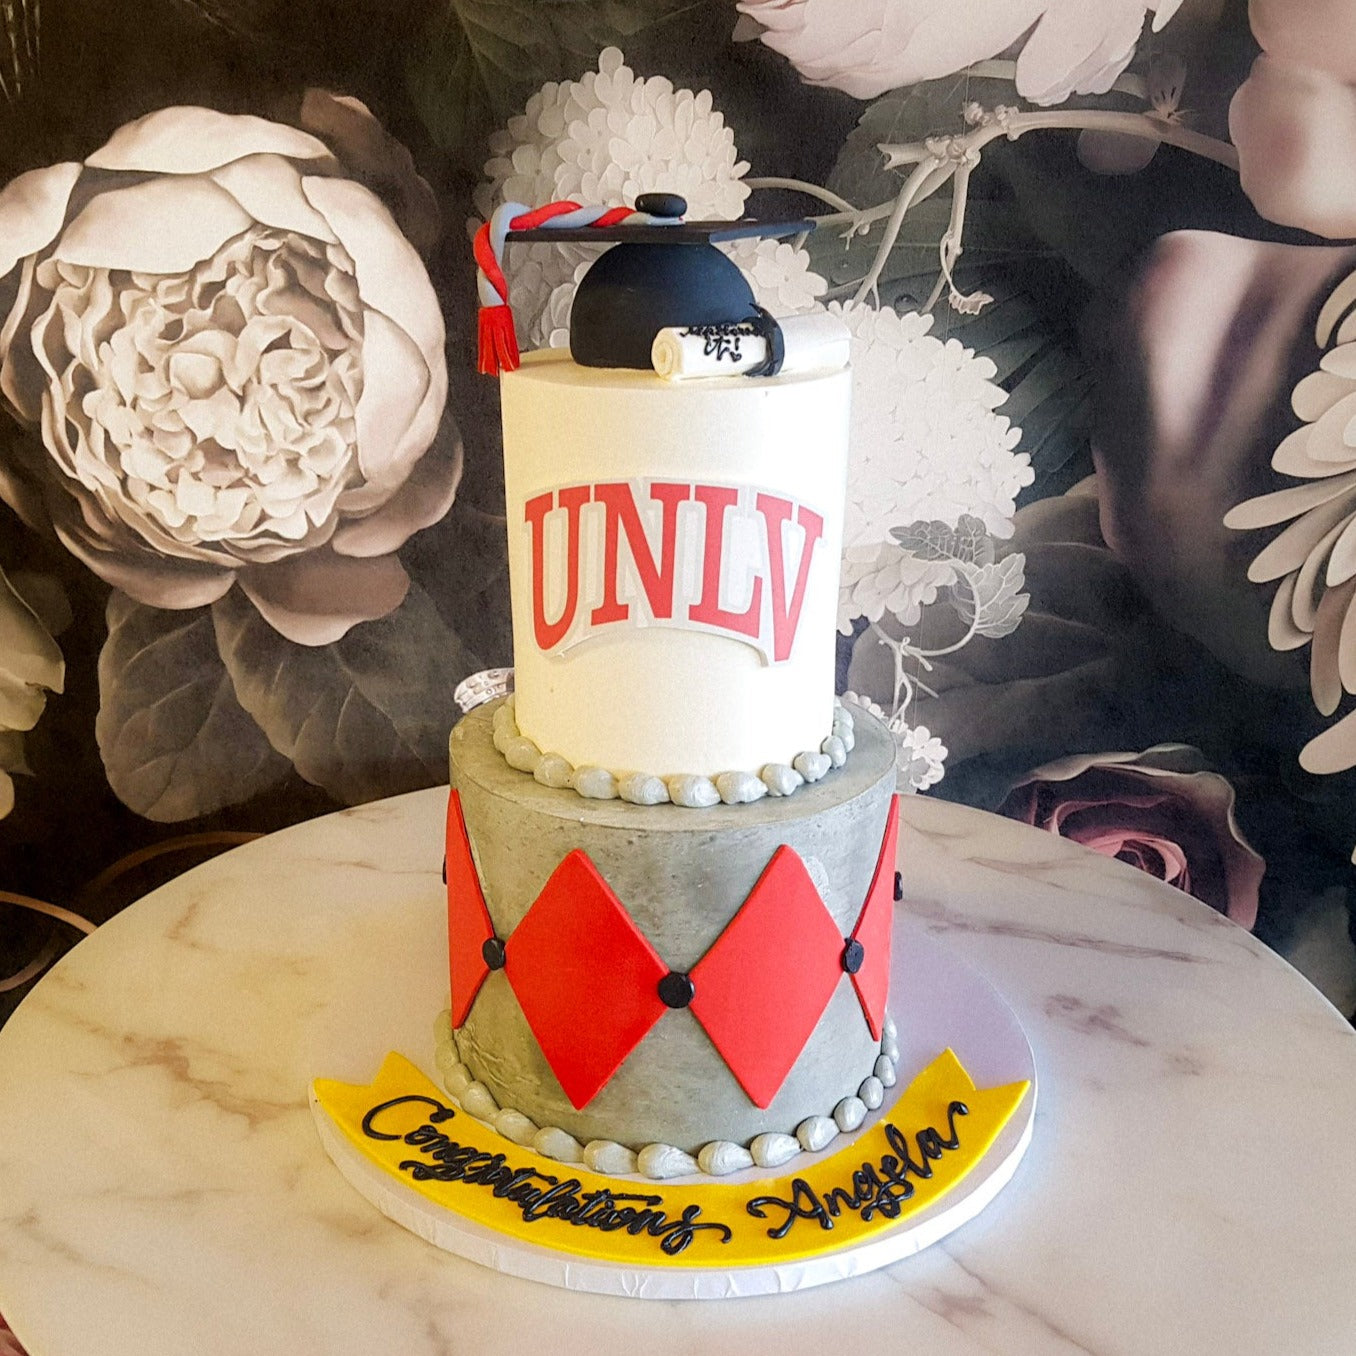 unvl rebels cake, graduation cake, congrats grad cake